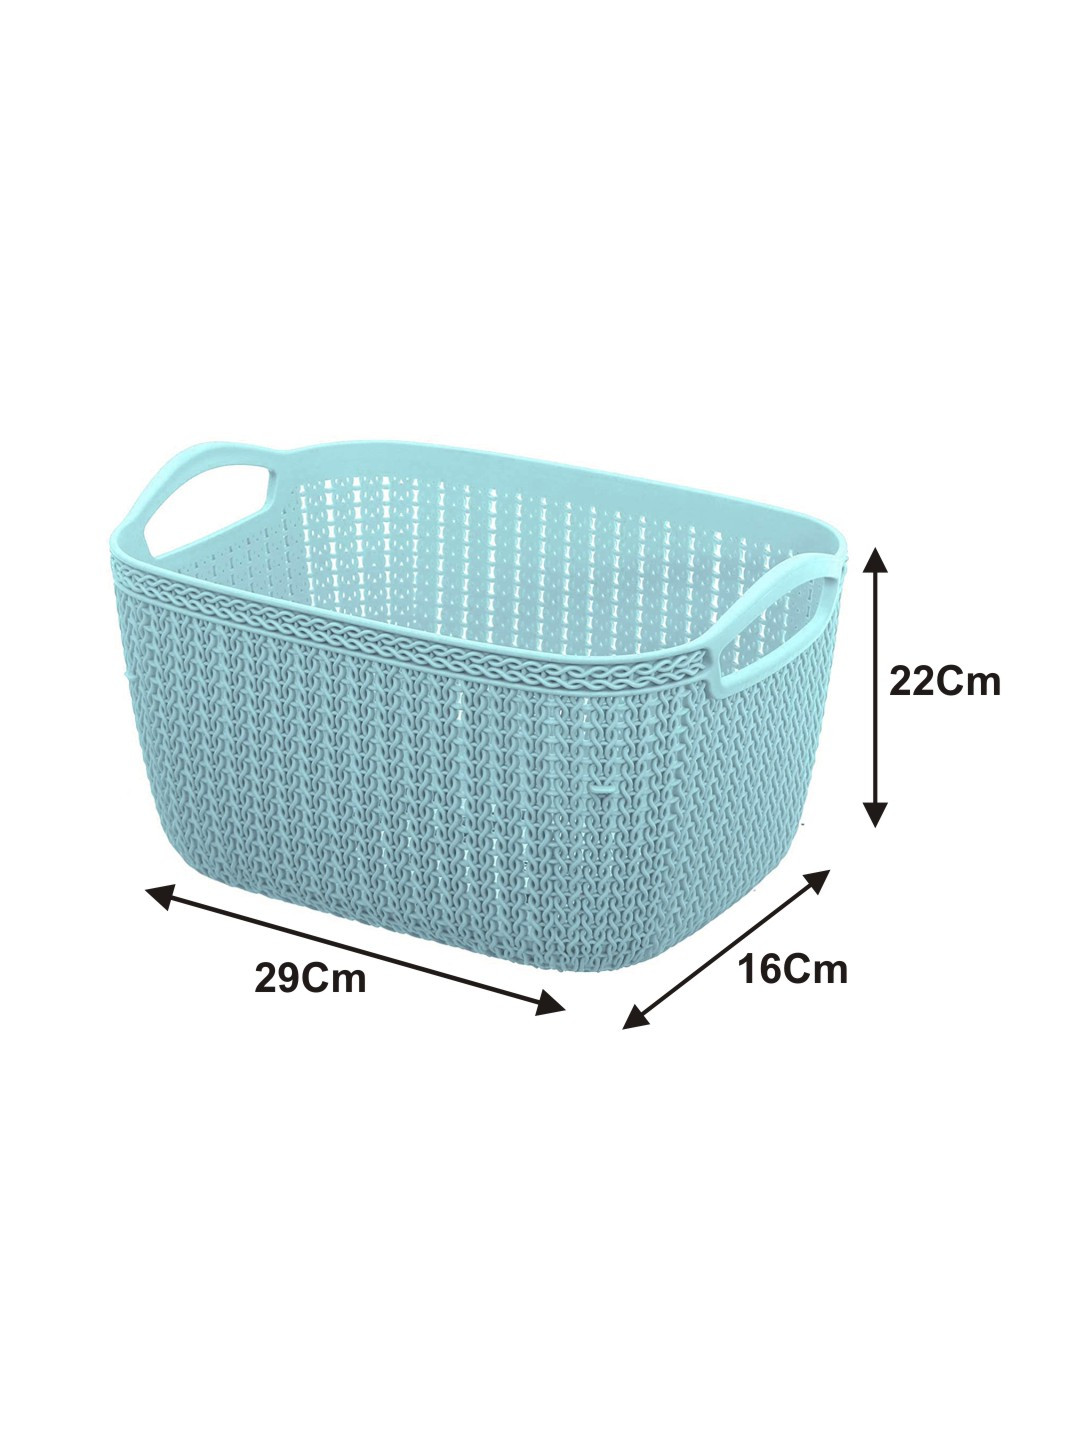 Kuber Industries Q-6 Unbreakable Plastic Multipurpose Large Size Flexible Storage Baskets/Fruit Vegetable Bathroom Stationary Home Basket with Handles (Light Green & Light Blue)